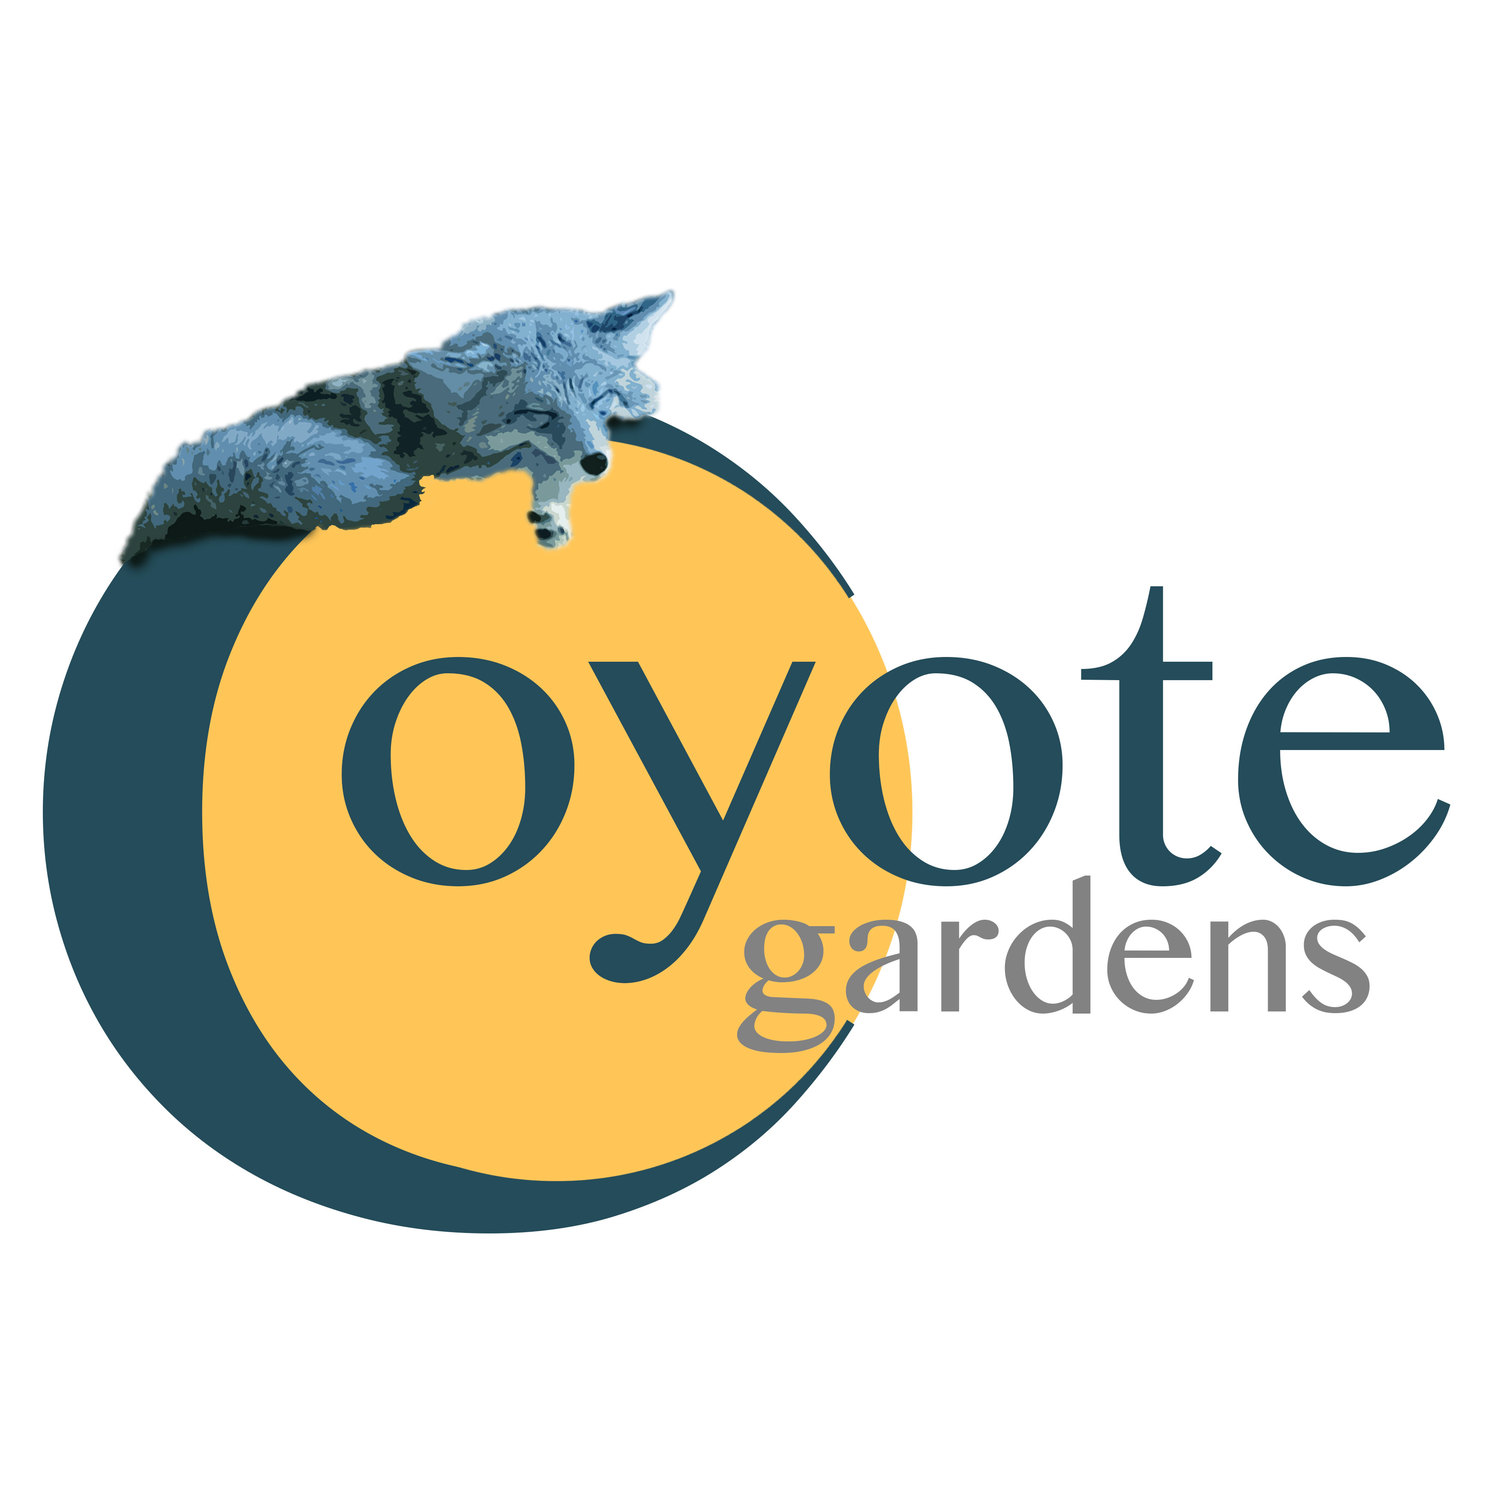 Coyote Gardens